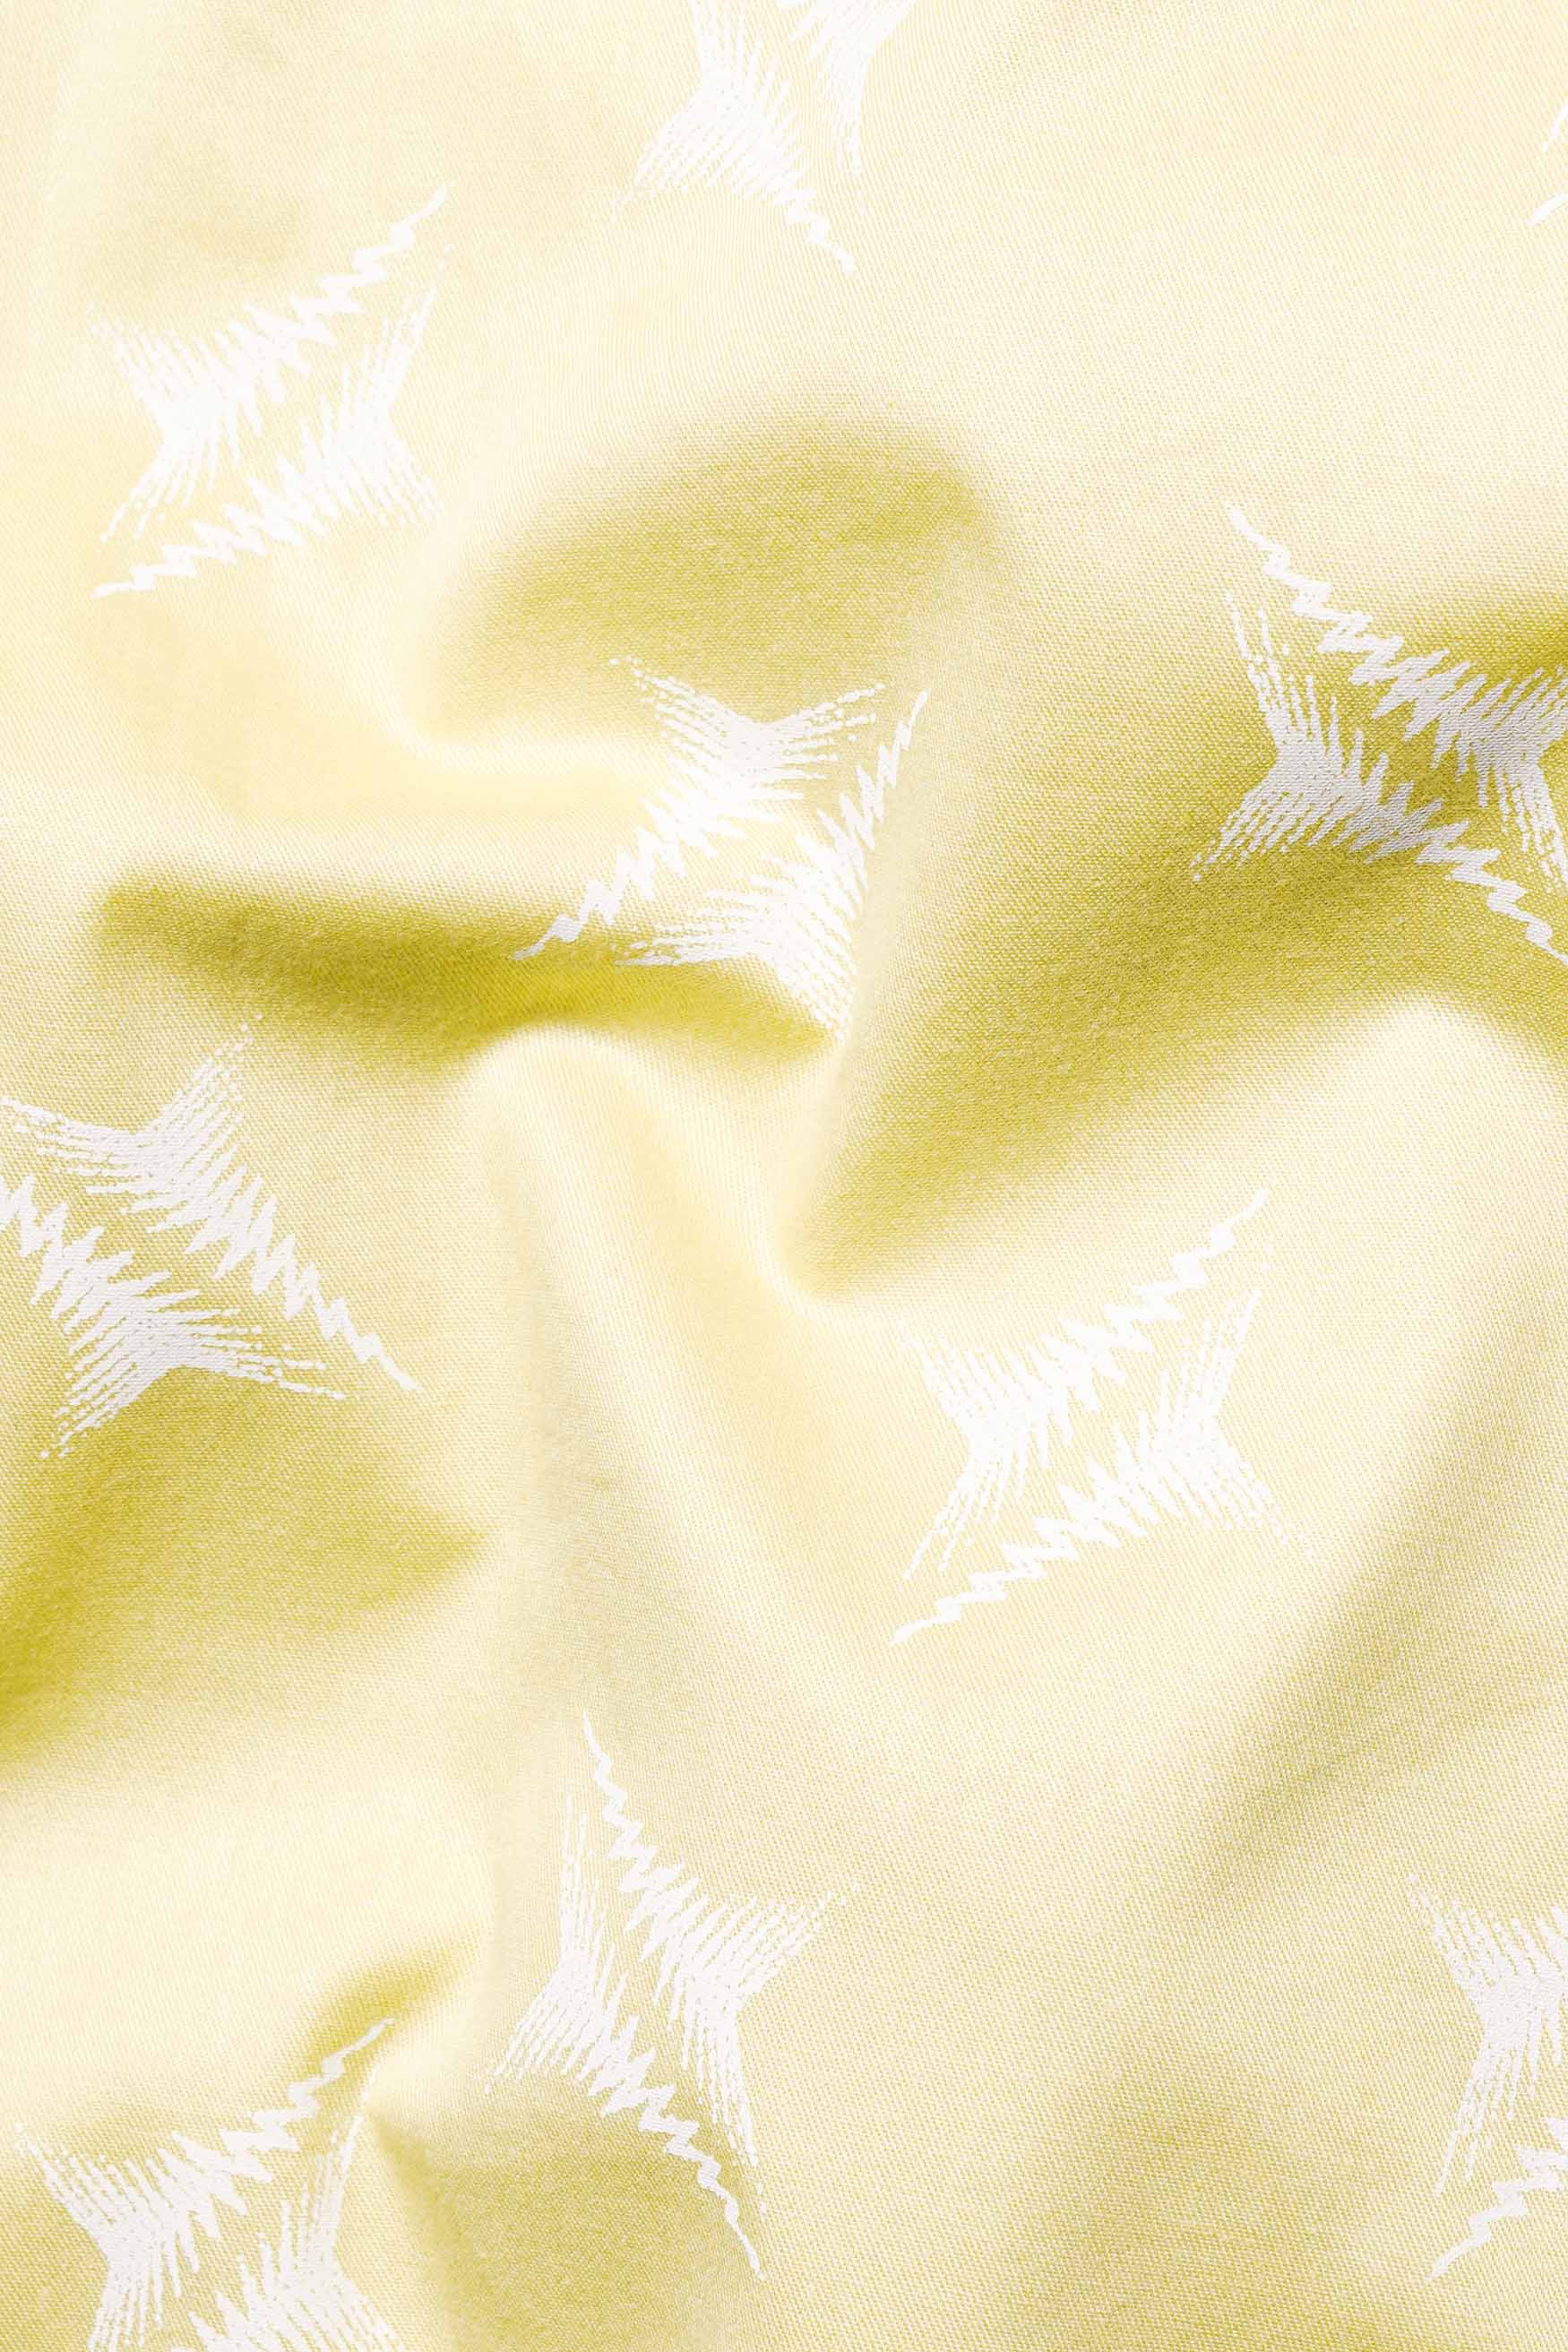 Sandwisp Yellow and White Printed Subtle Sheen Super Soft Premium Cotton Shirt 11455-38, 11455-H-38, 11455-39, 11455-H-39, 11455-40, 11455-H-40, 11455-42, 11455-H-42, 11455-44, 11455-H-44, 11455-46, 11455-H-46, 11455-48, 11455-H-48, 11455-50, 11455-H-50, 11455-52, 11455-H-52